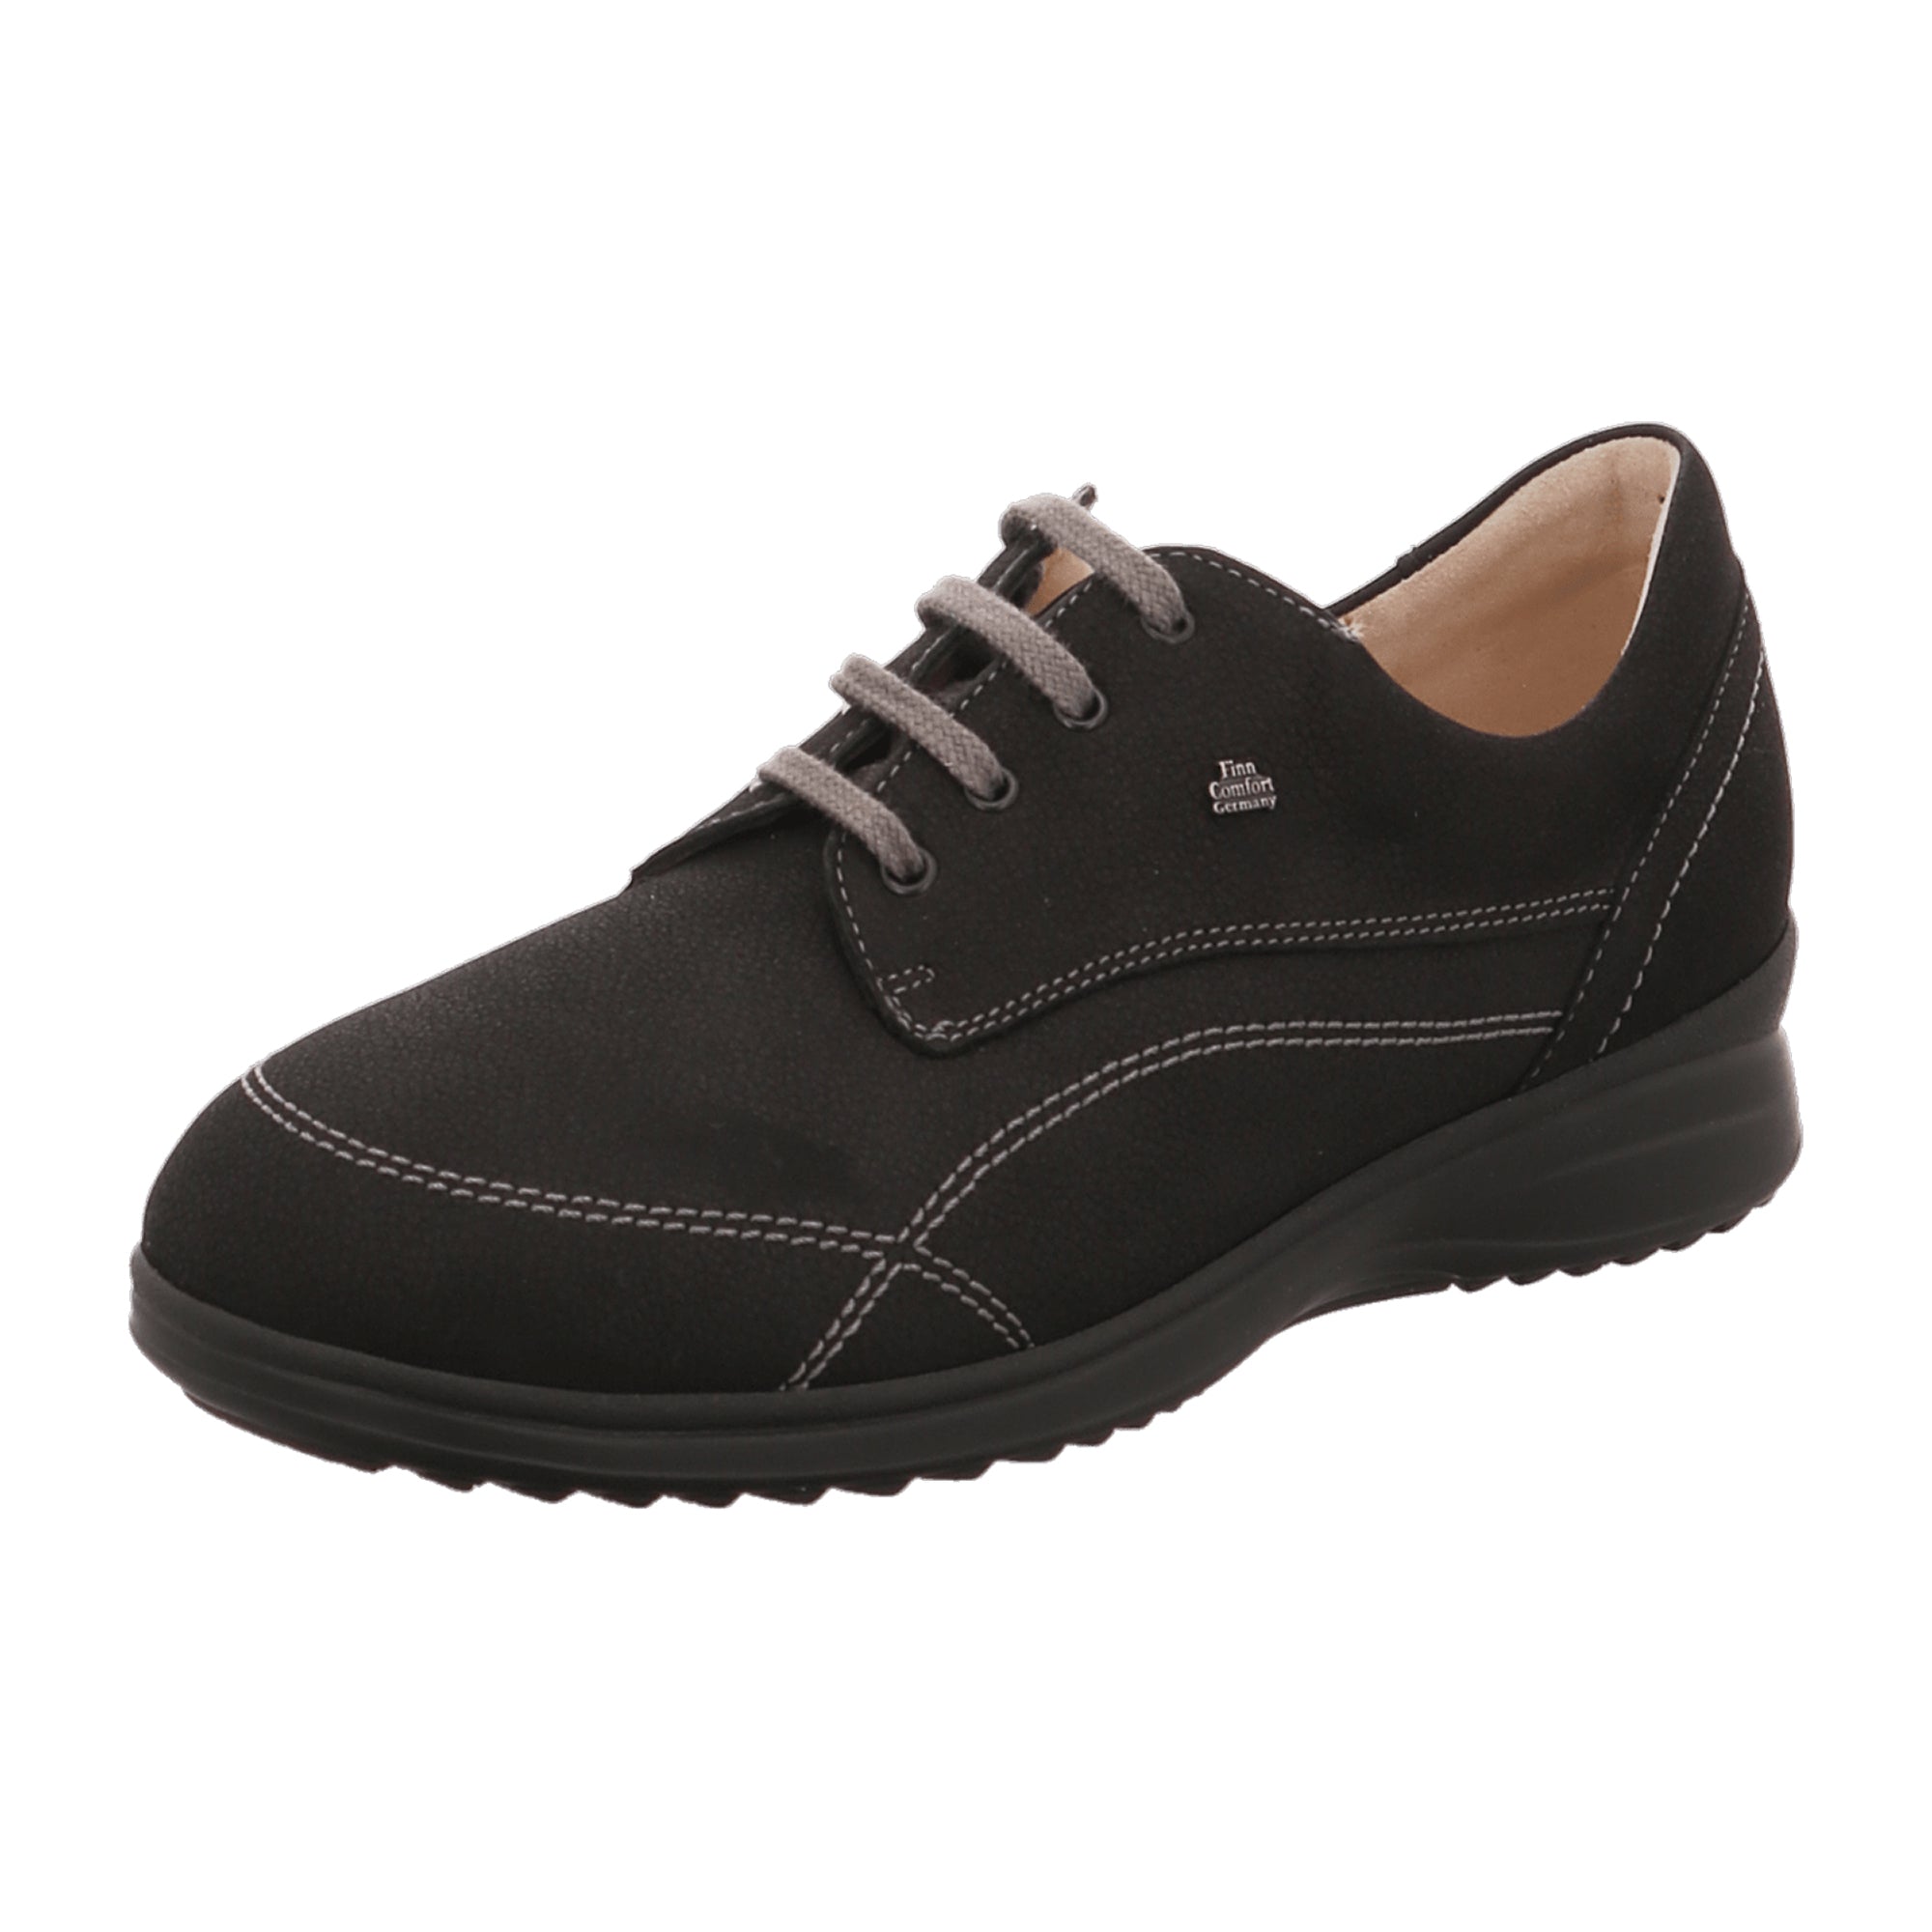 Finn Comfort 96519 Women's Orthopedic Black Shoes - Stylish & Comfortable